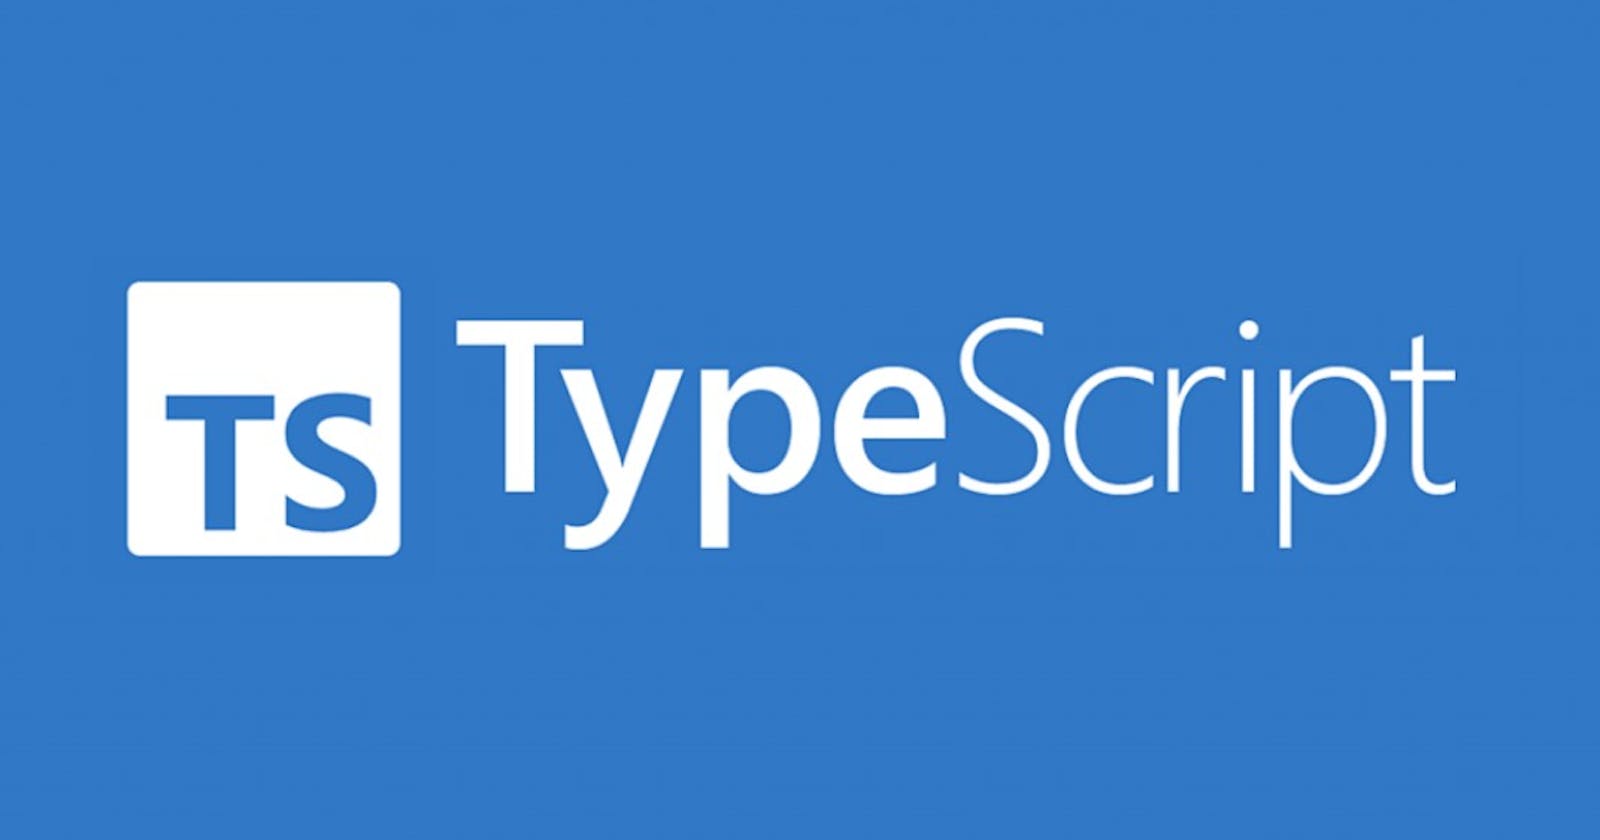 "TypeScript: The Next Evolution of JavaScript"